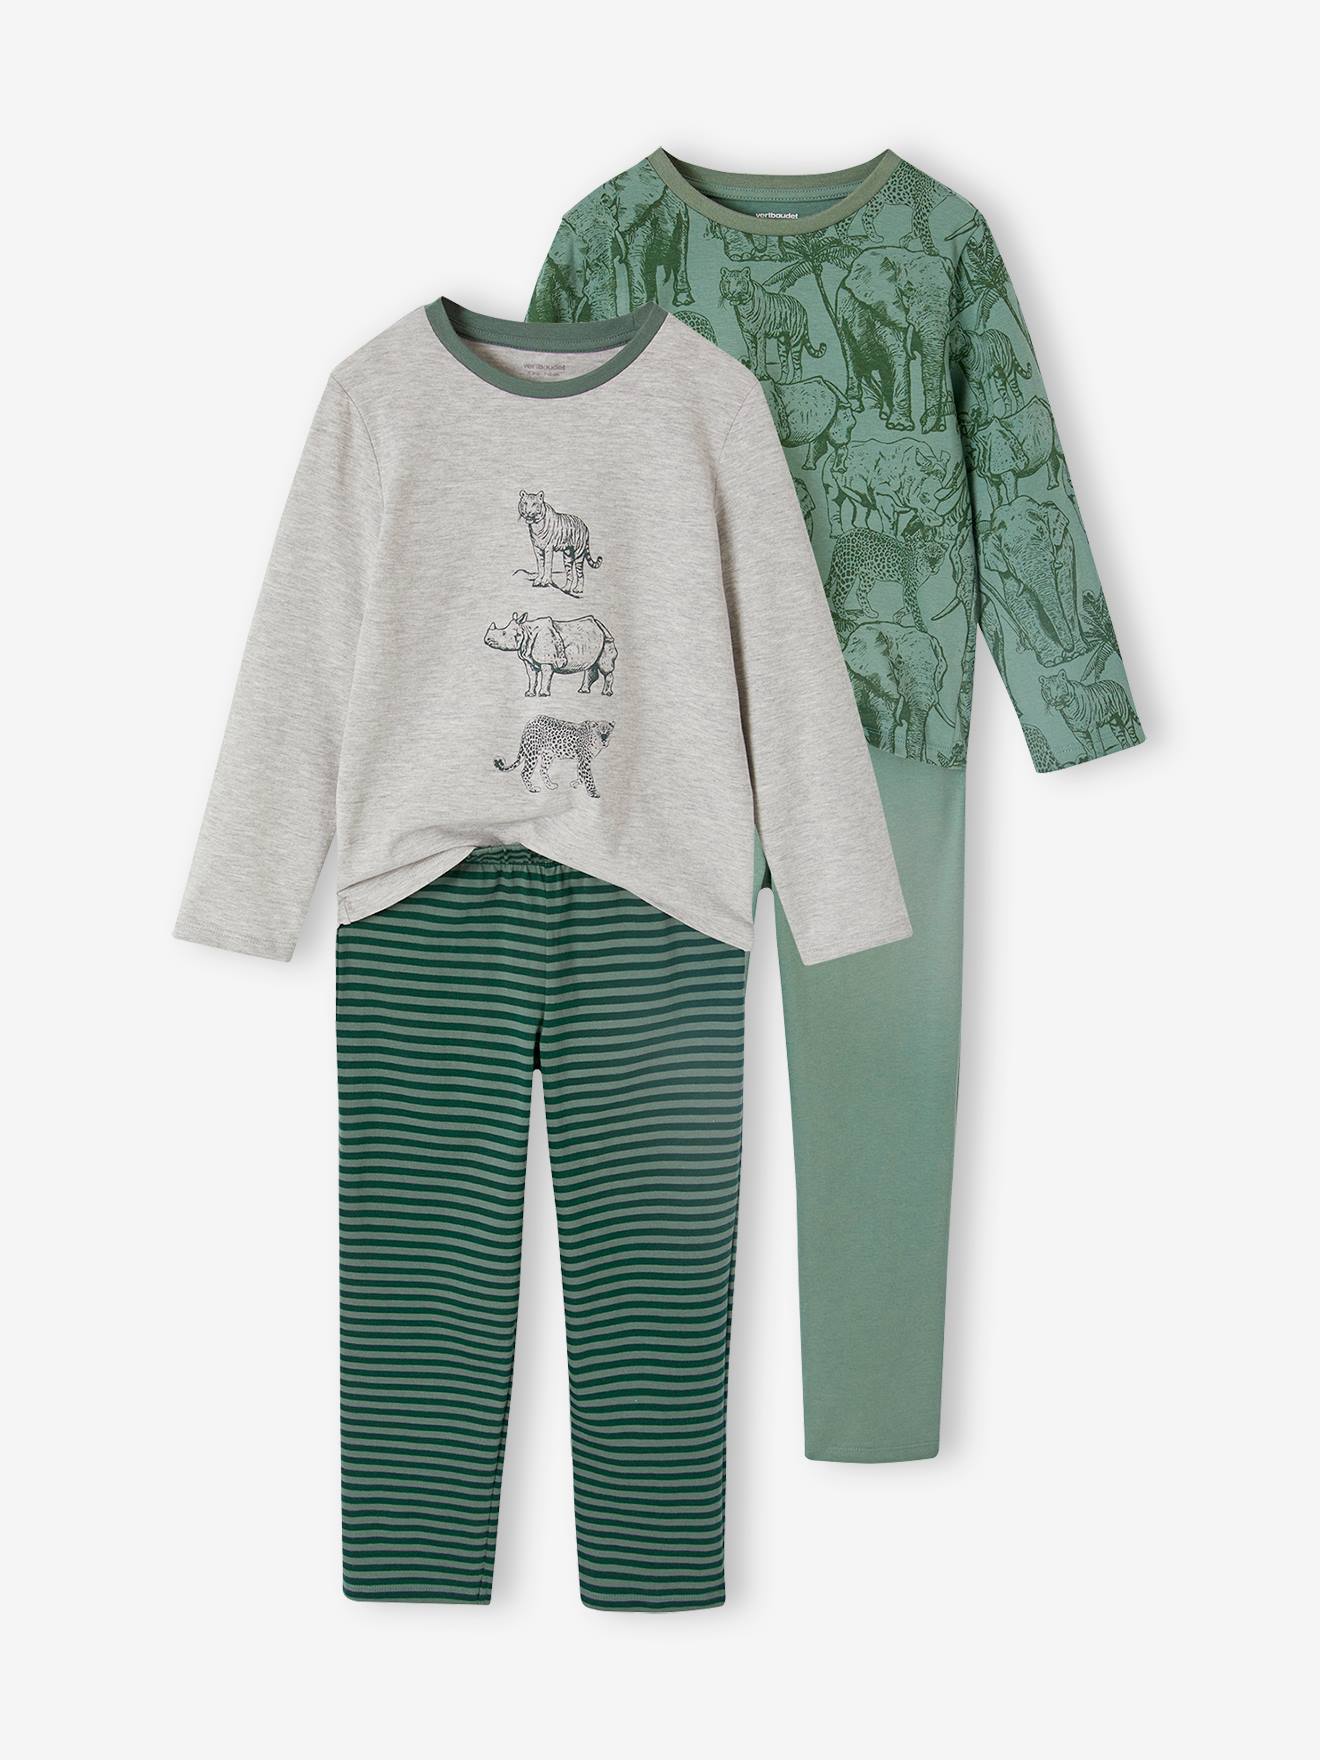 Pack of 2 "Jungle" Pyjamas for Boys green